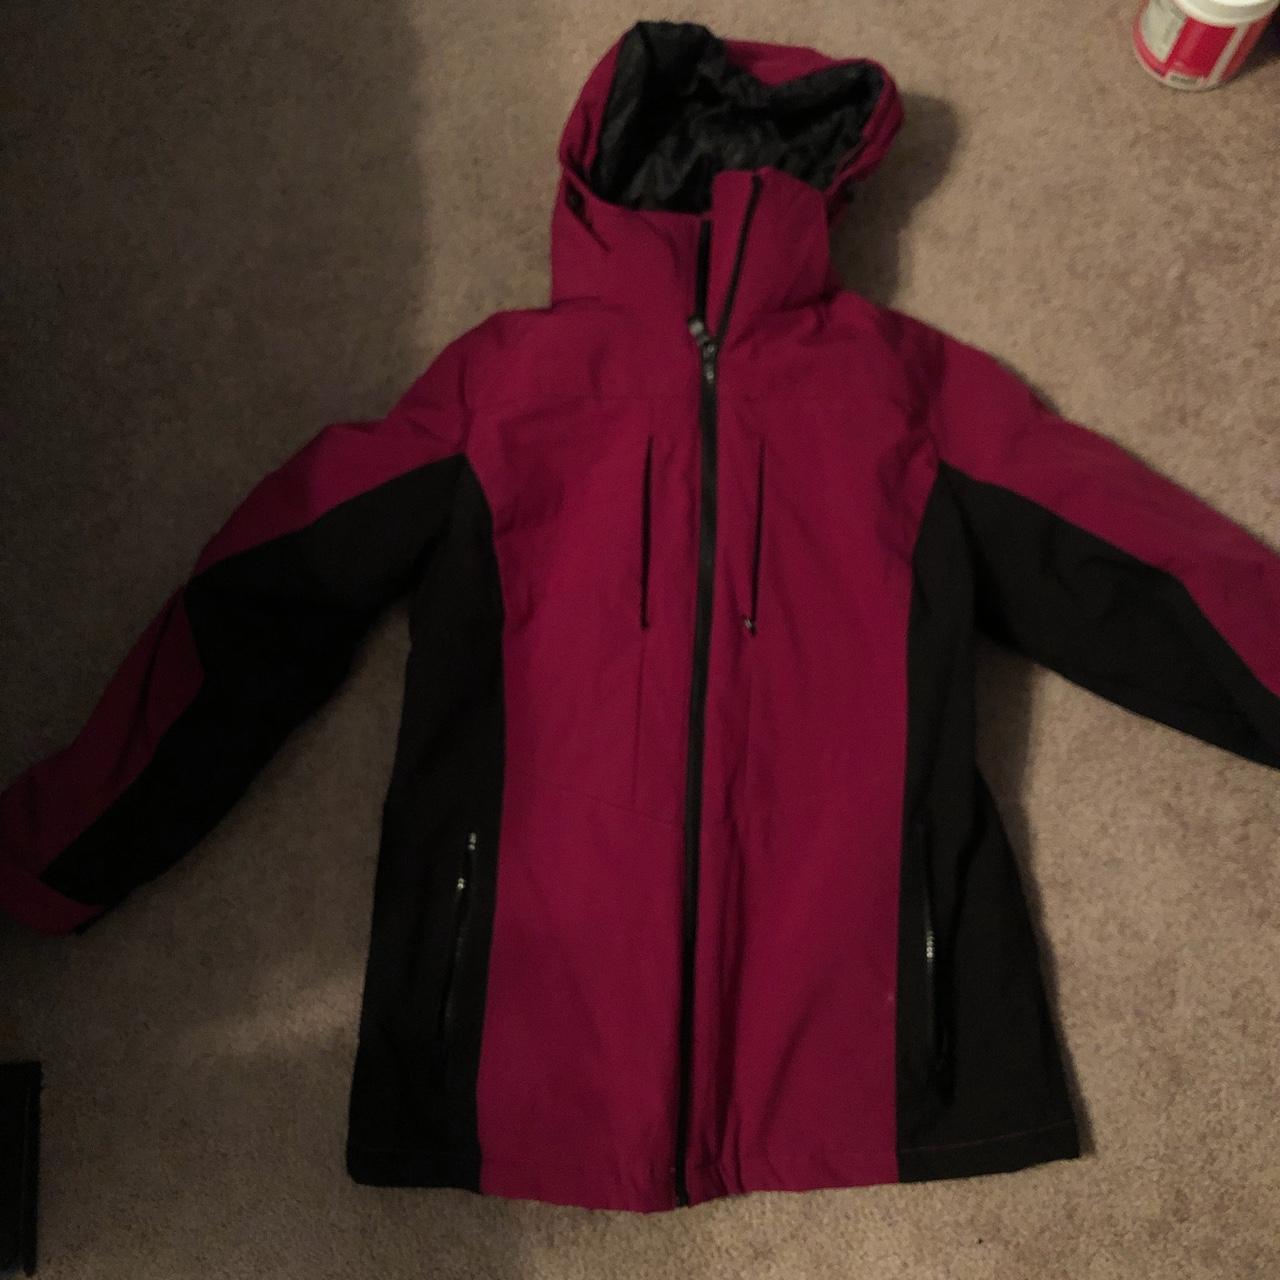 Product Image 1 - Womens winter coat, worn less